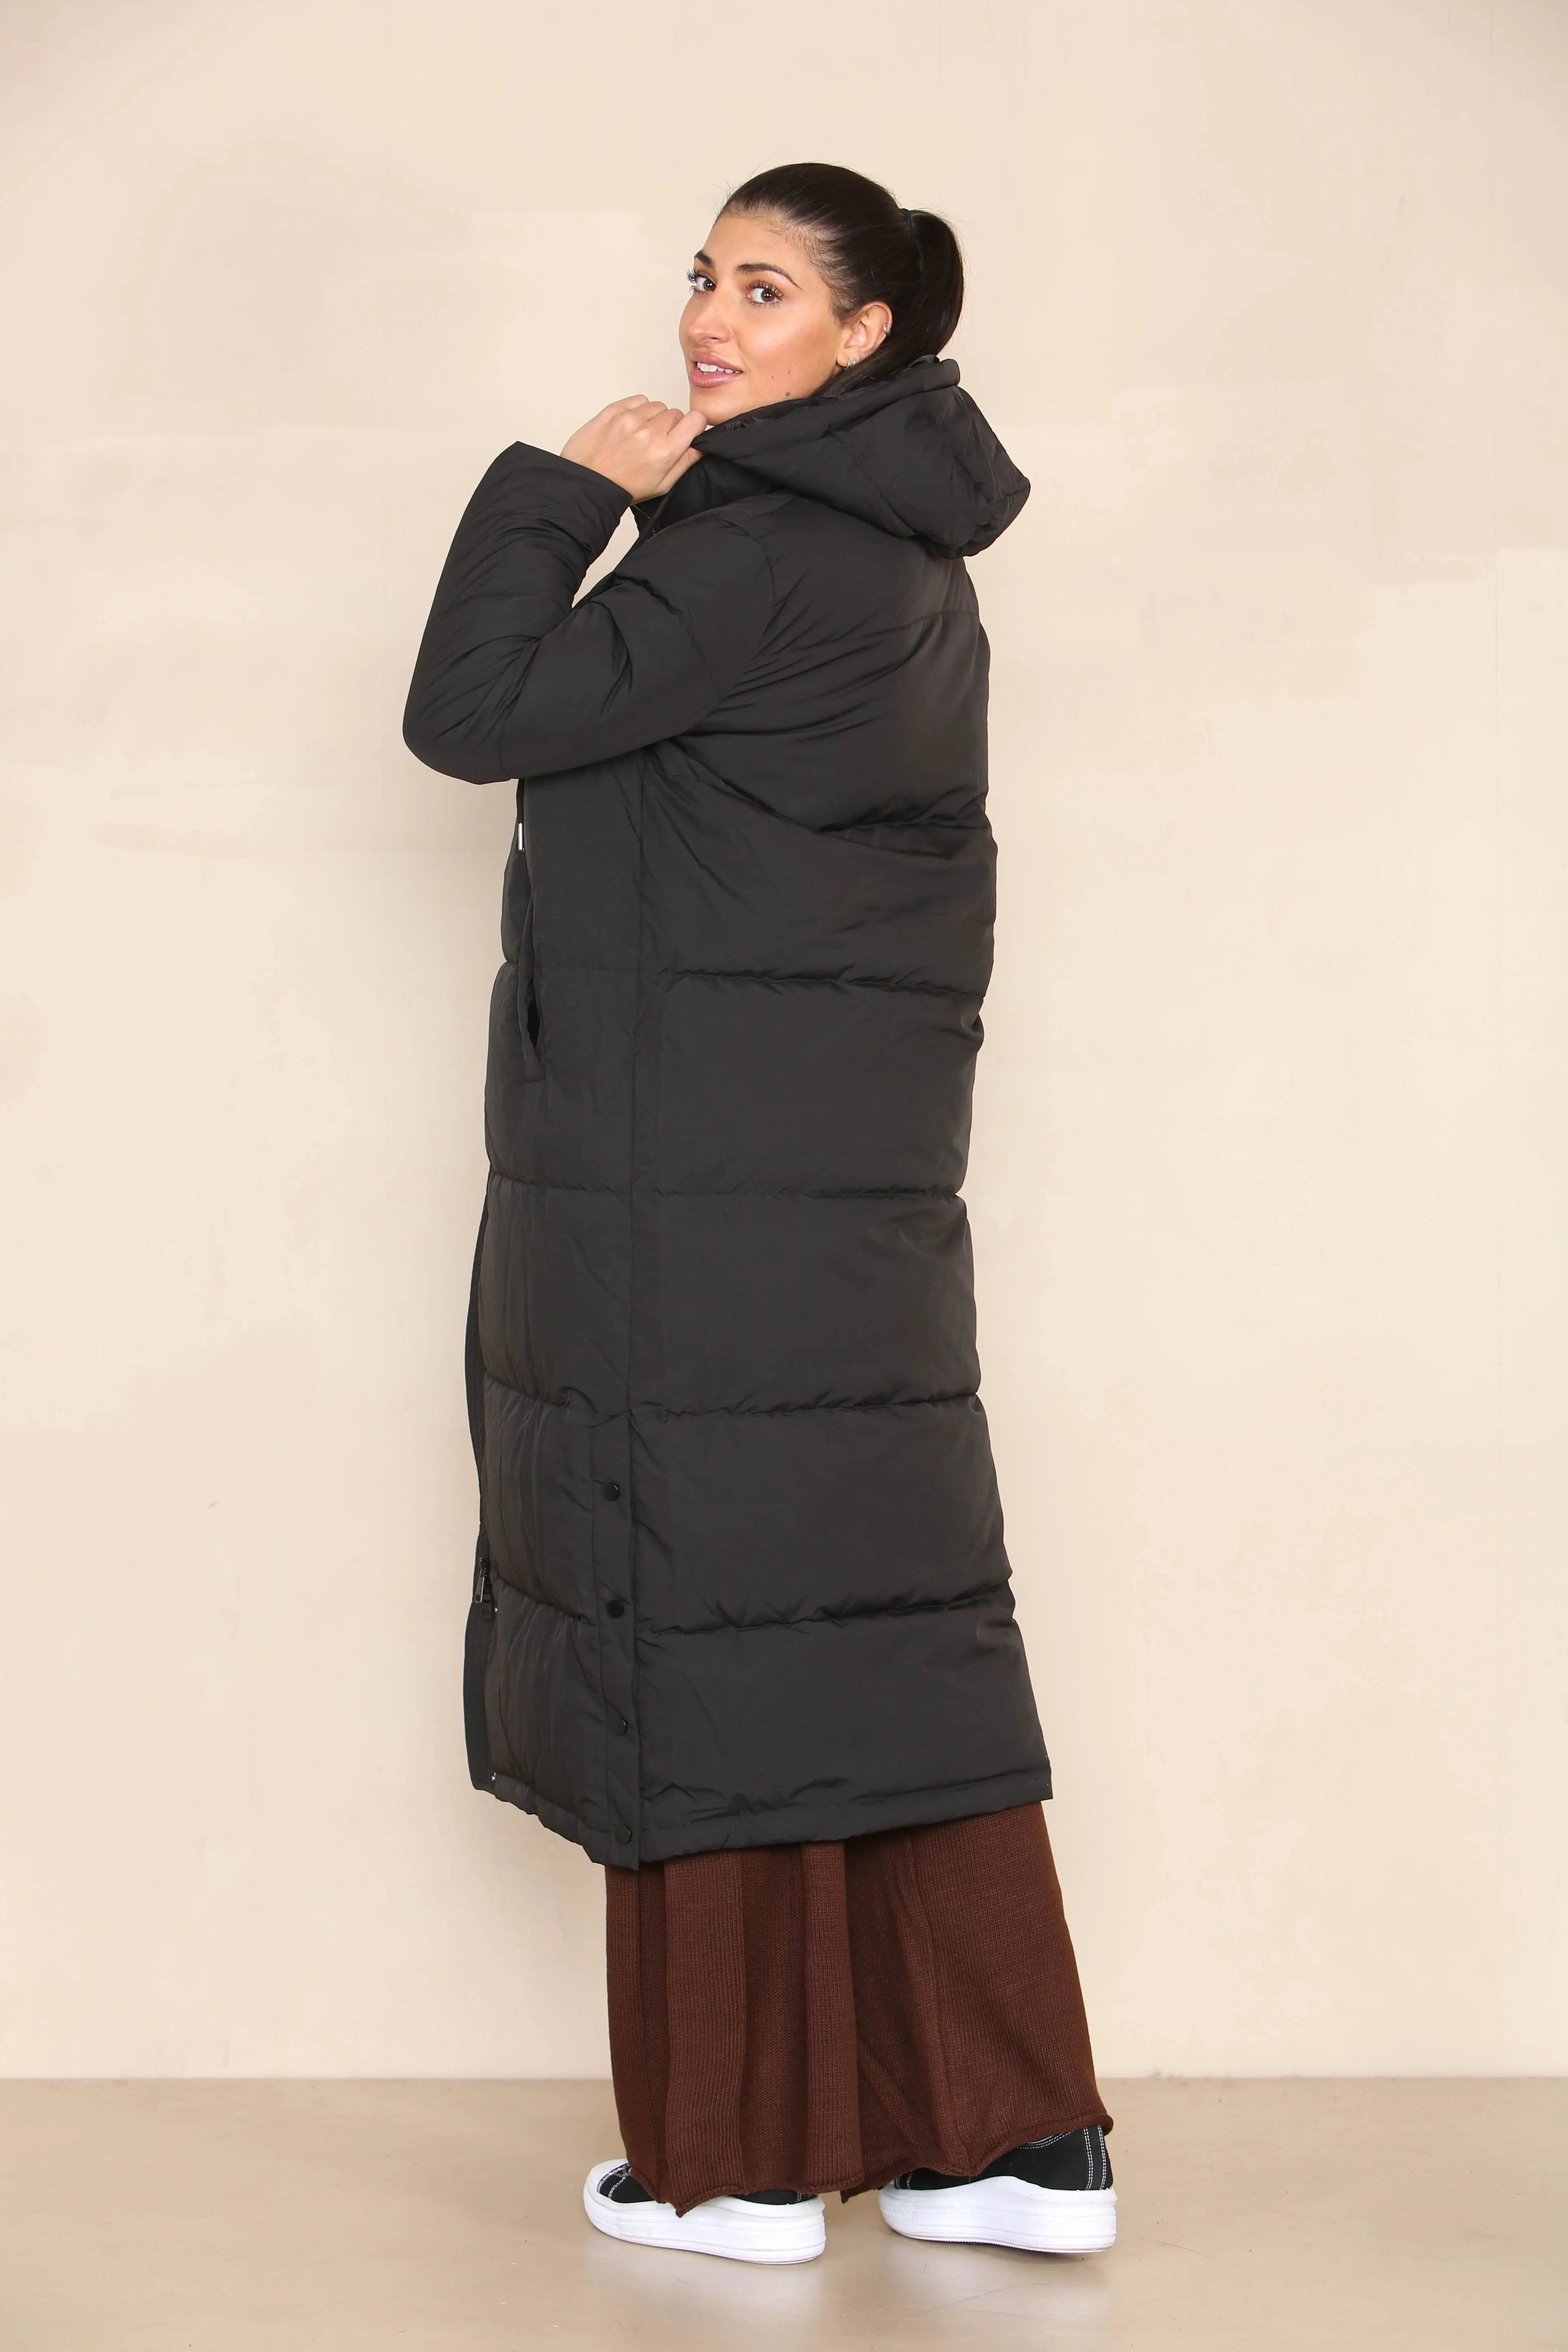 KATCH ME Black Winter Chic Side Slit Hooded Zip-Up Thermal Cotton Coat Coat